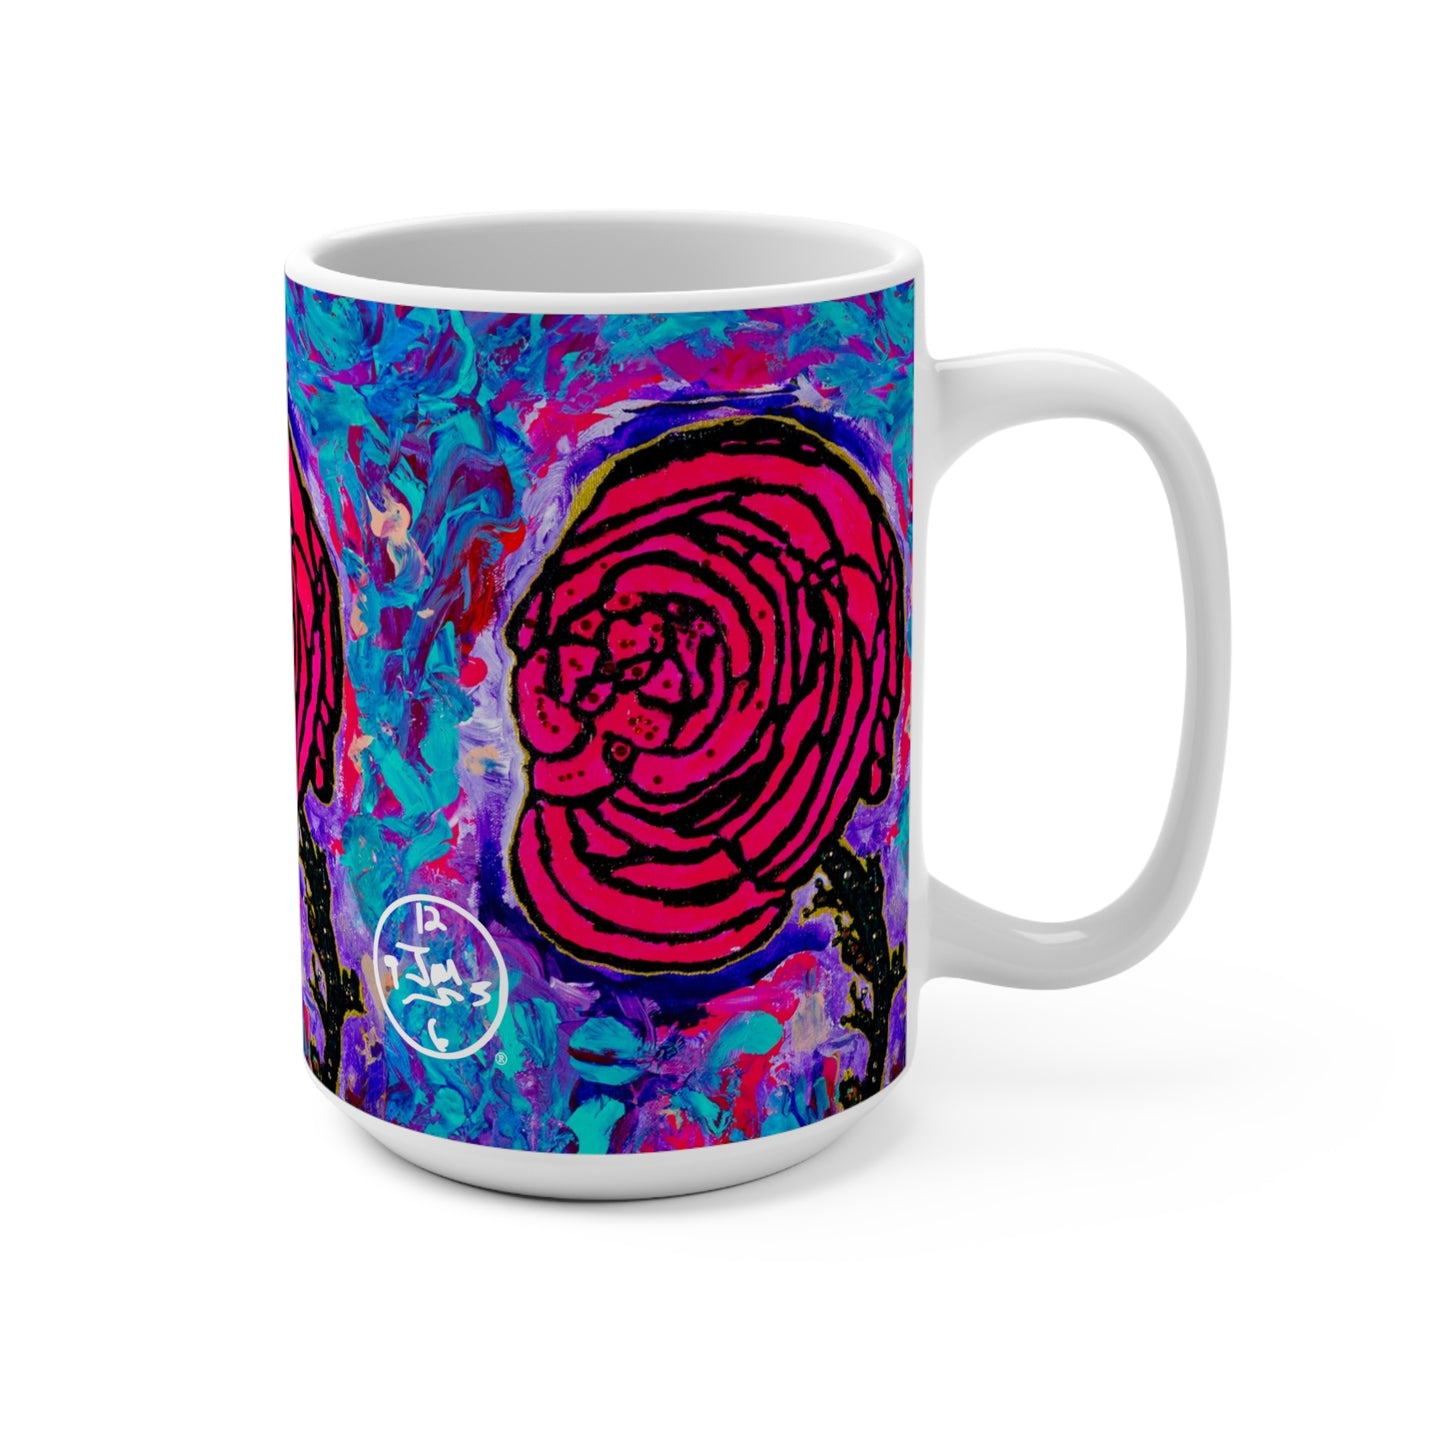 Cotton Candy Rose 15oz Mug by Jumper Maybach® - Jumper Maybach